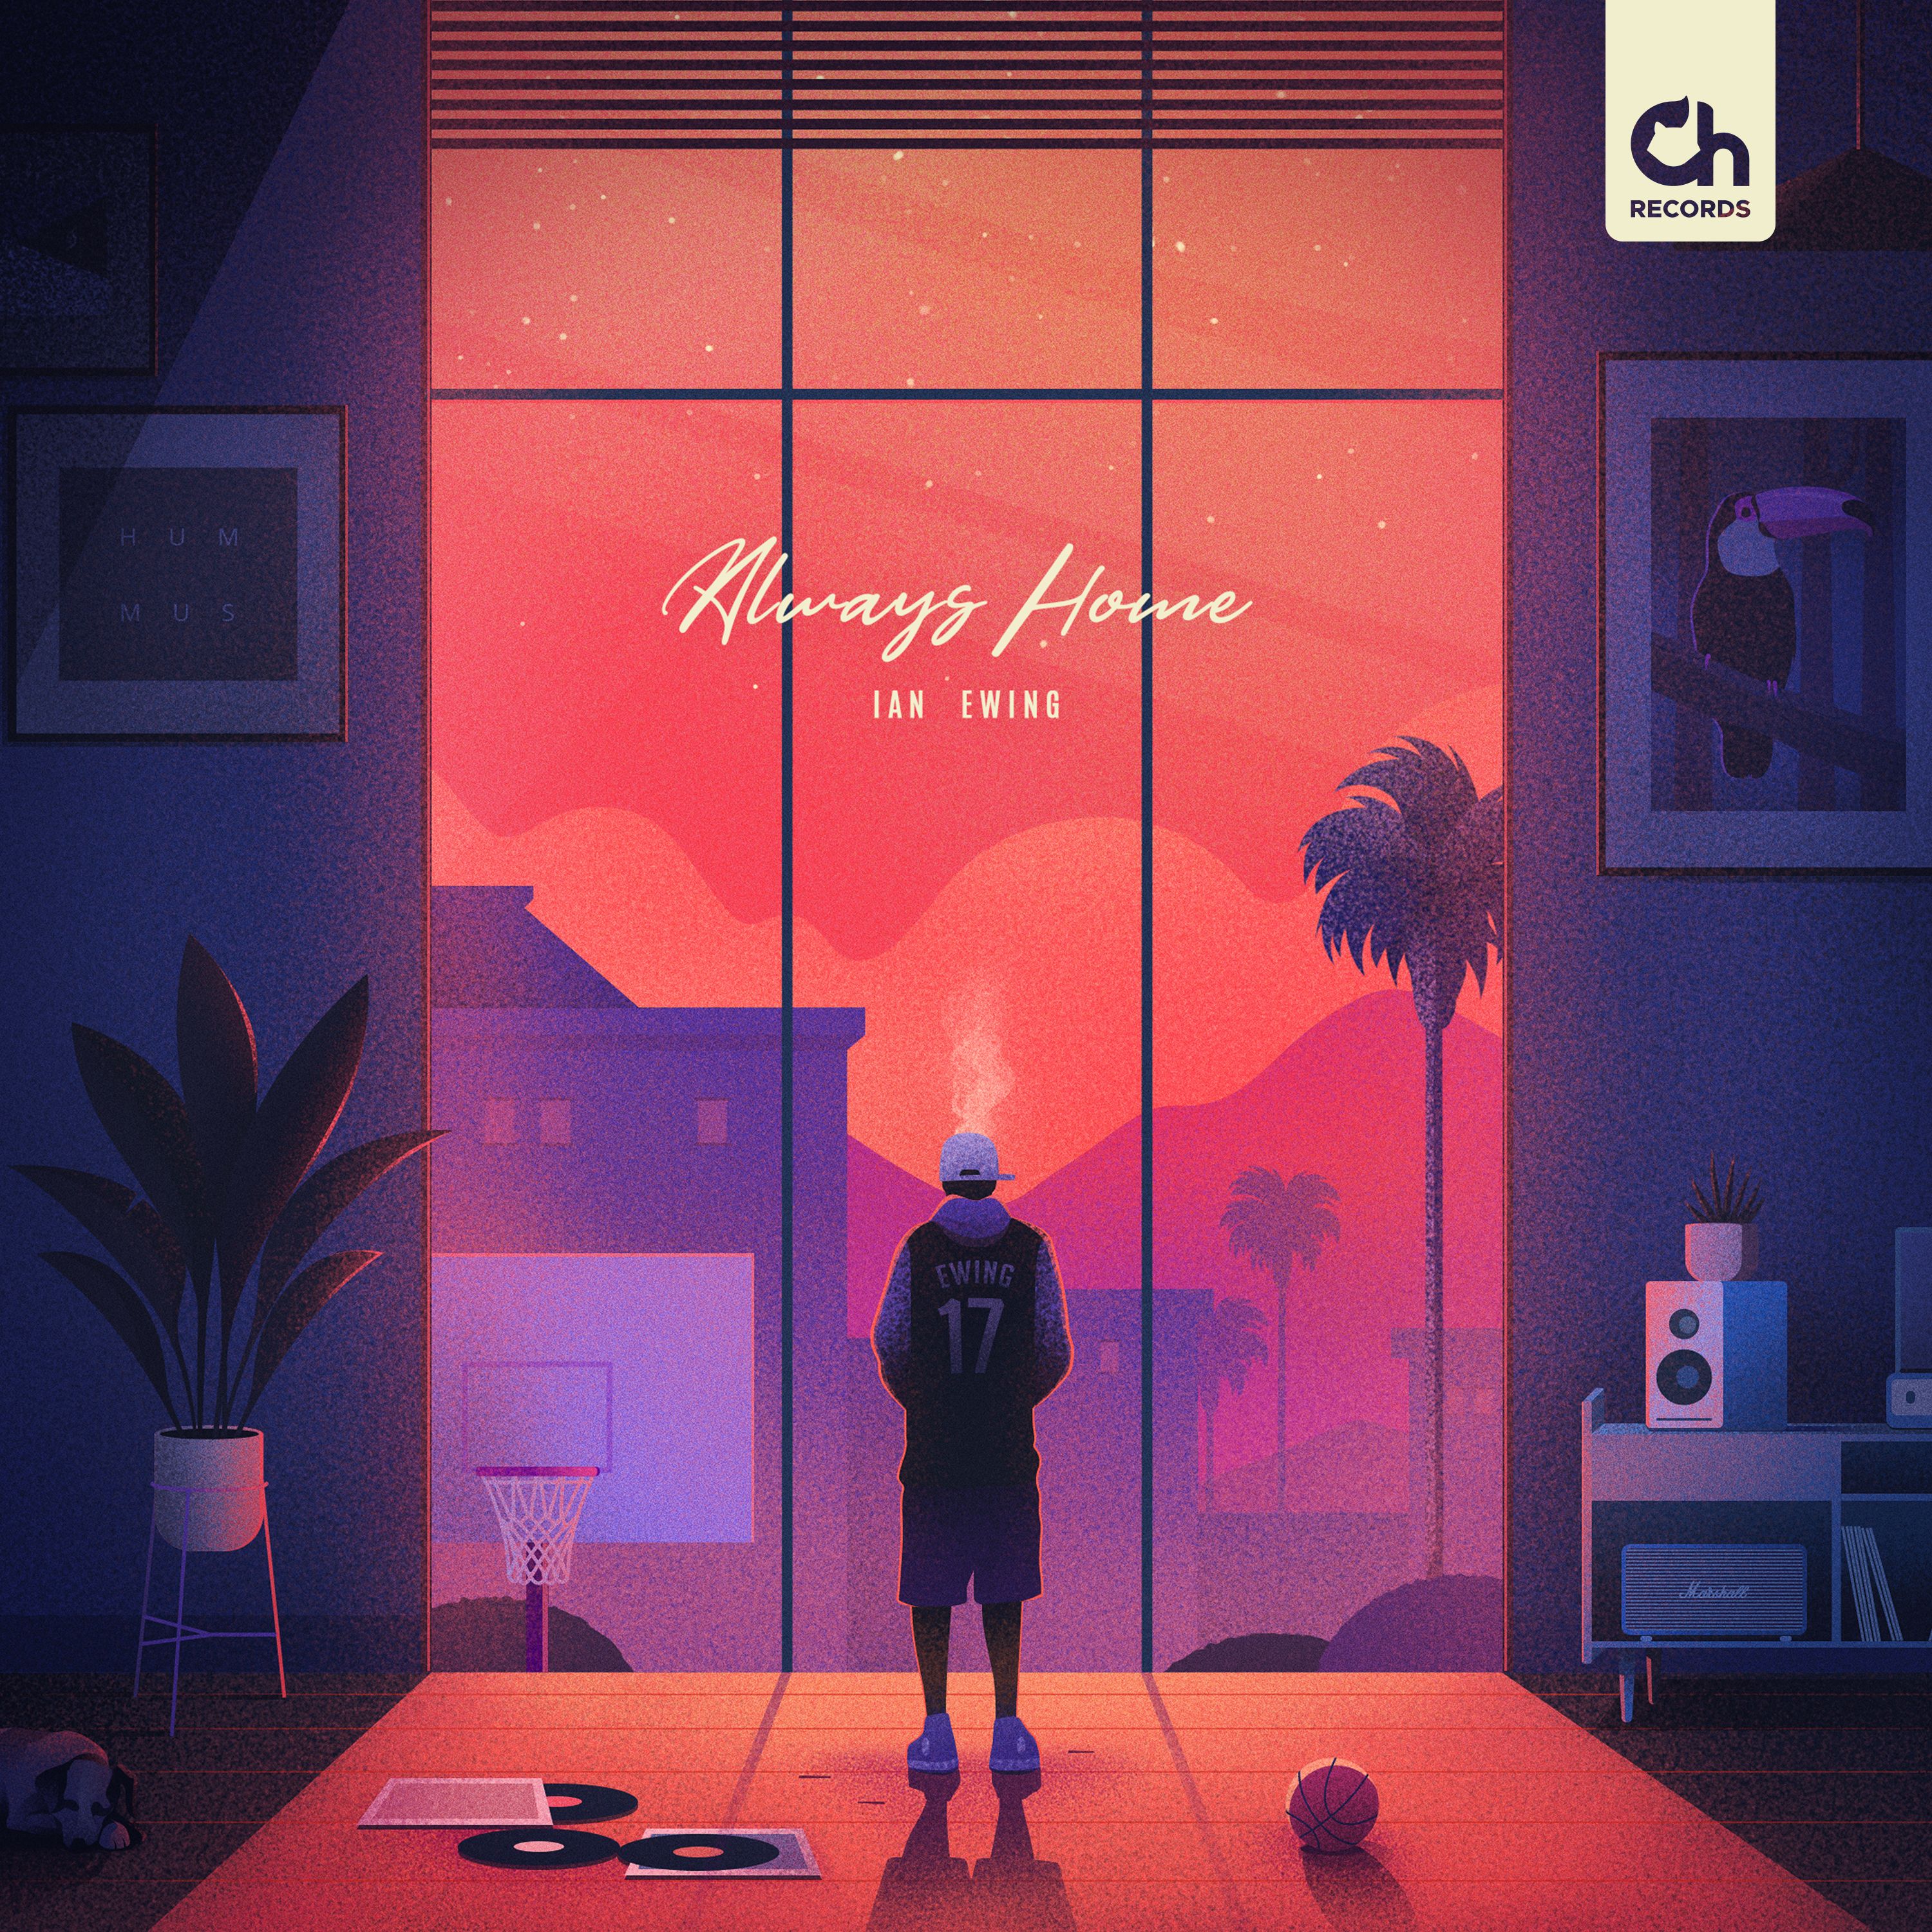 Herunterladen Ian Ewing - 17 ["Always Home" EP out on 09.09]